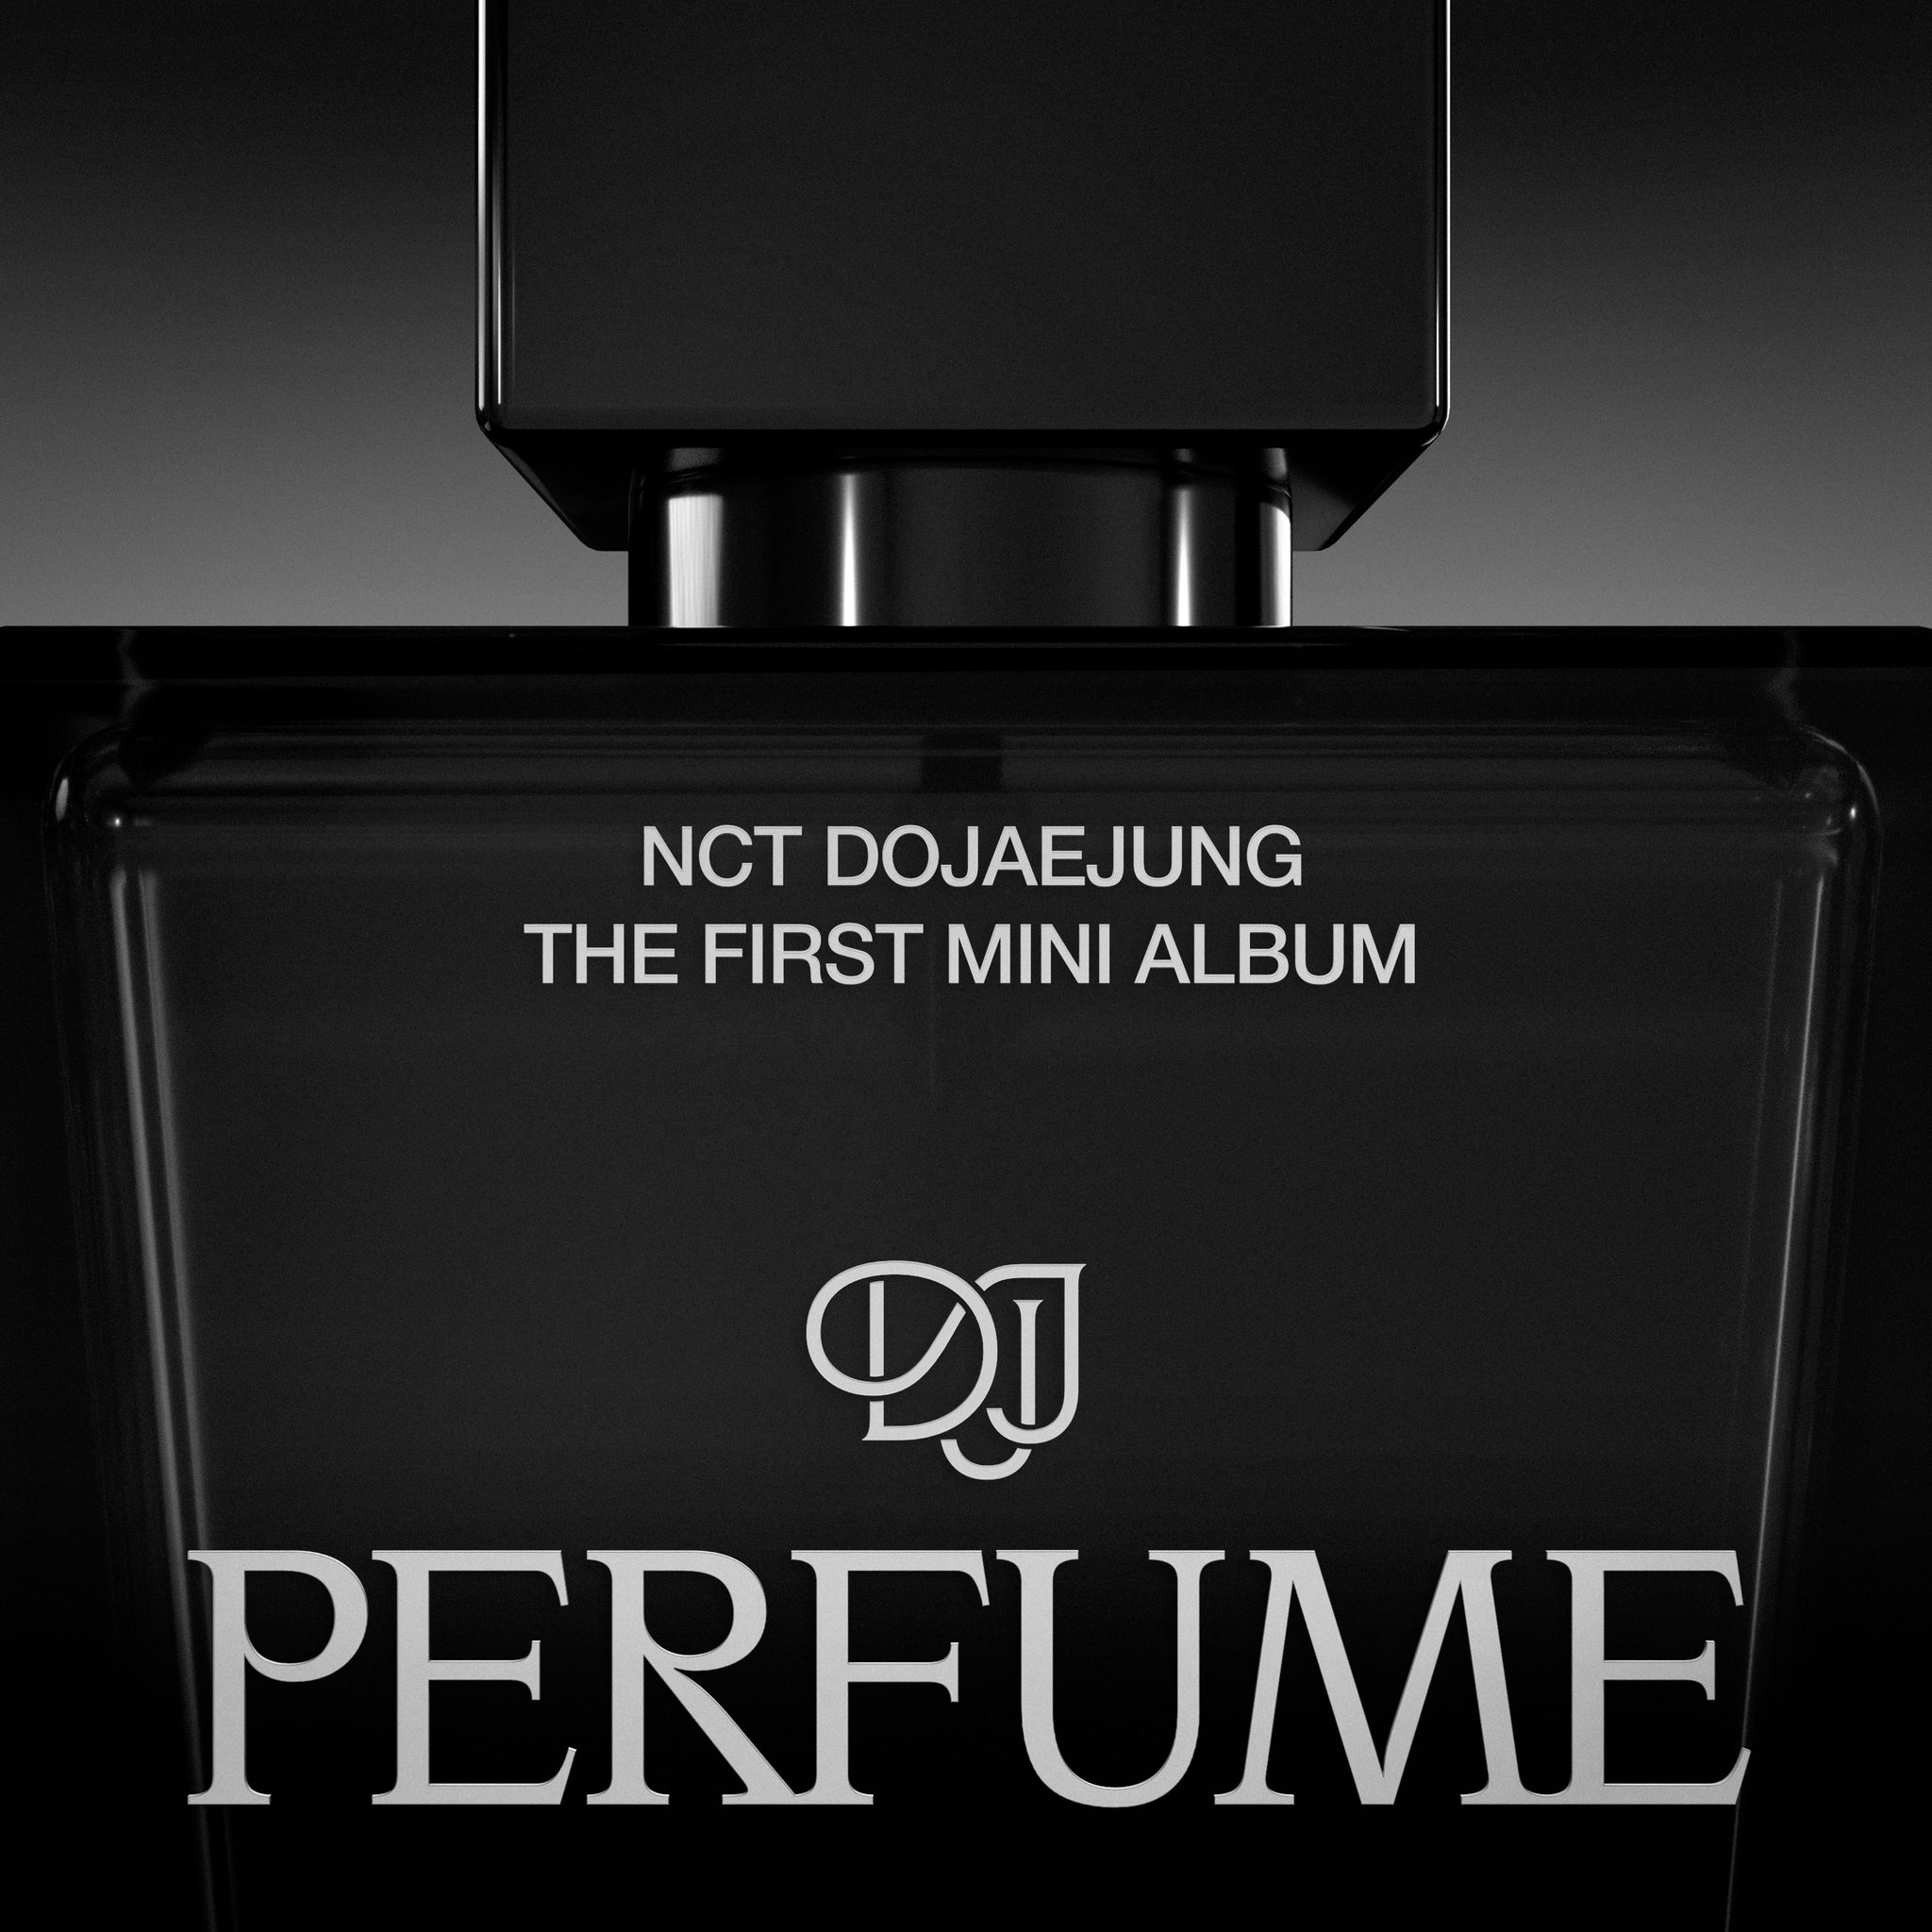 Kpop Planet announced NCT DOJAEJUNG Perfume